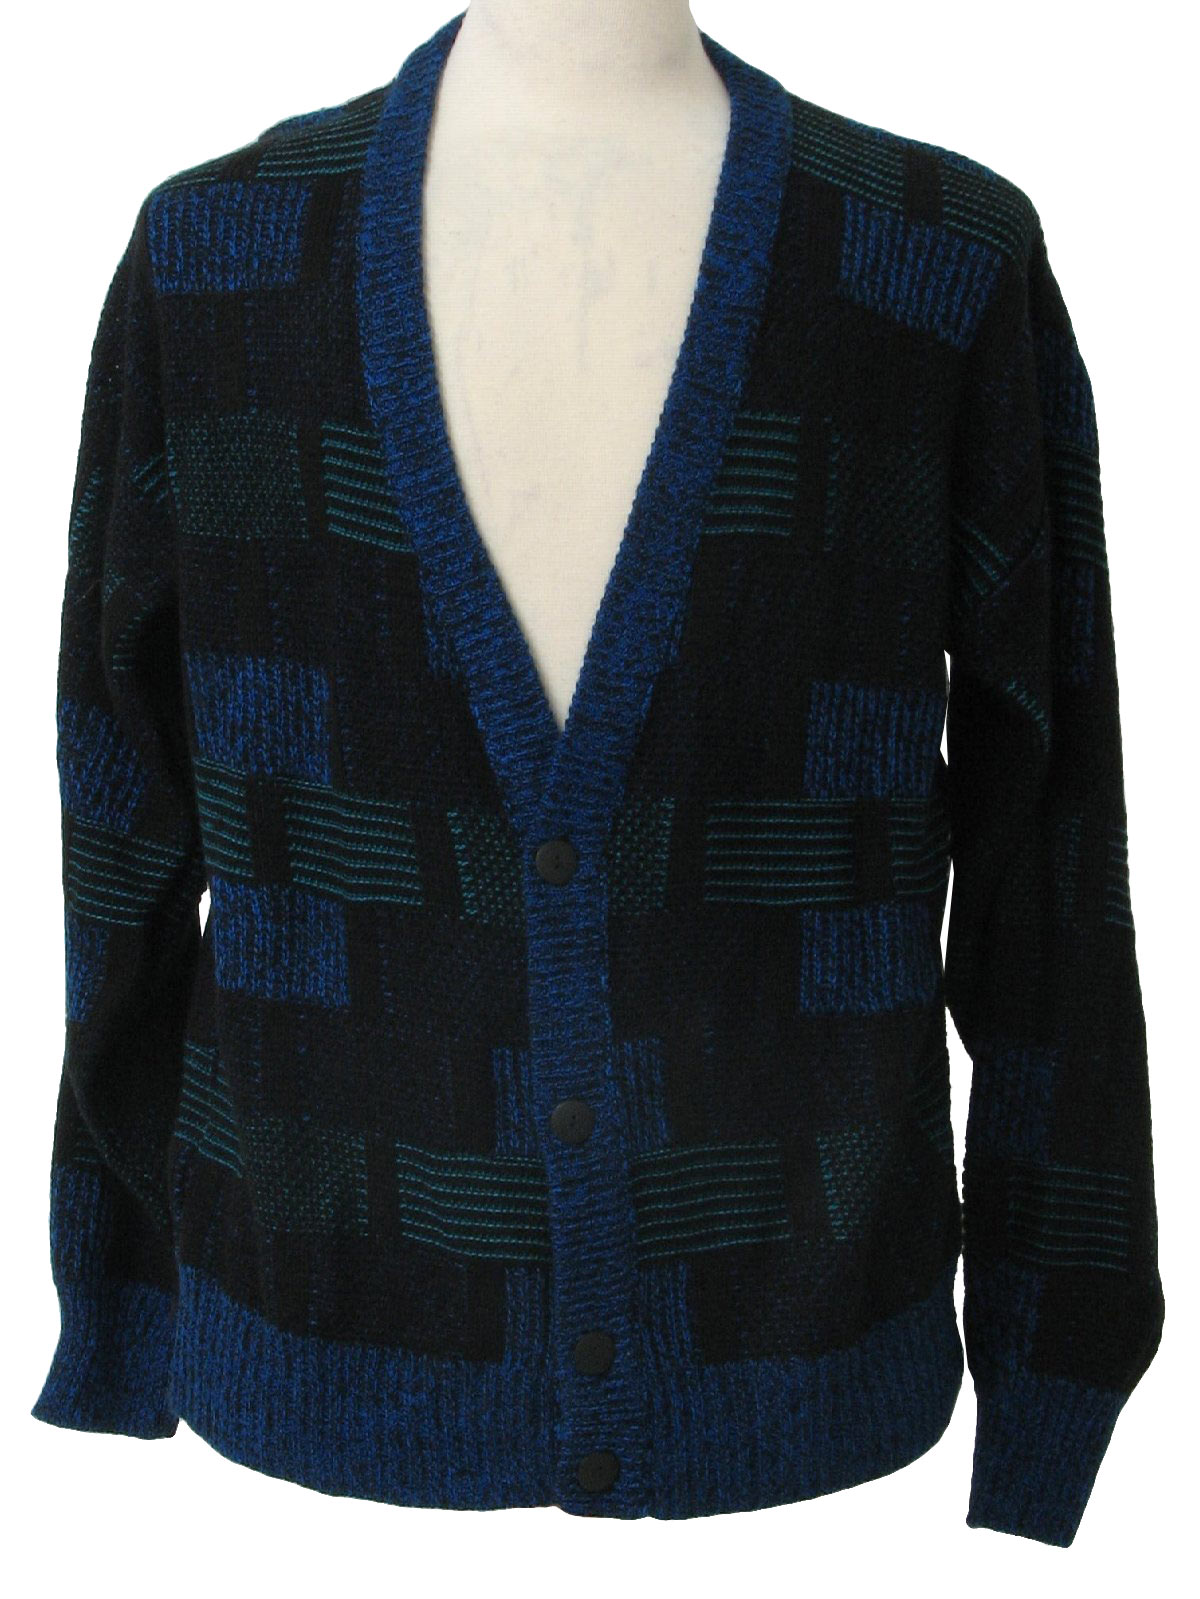 Retro 1990's Caridgan Sweater (Willow Bay) : 90s -Willow Bay- Mens